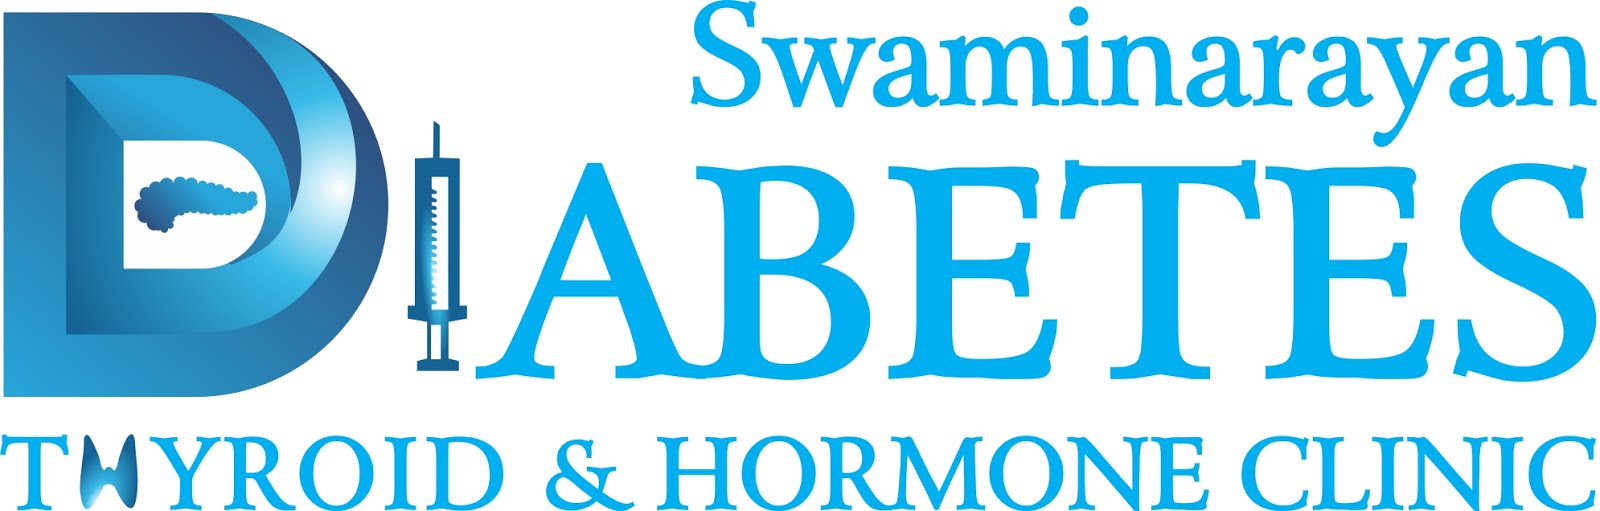 Swaminarayan Diabetes, Thyroid & Hormone Clinic